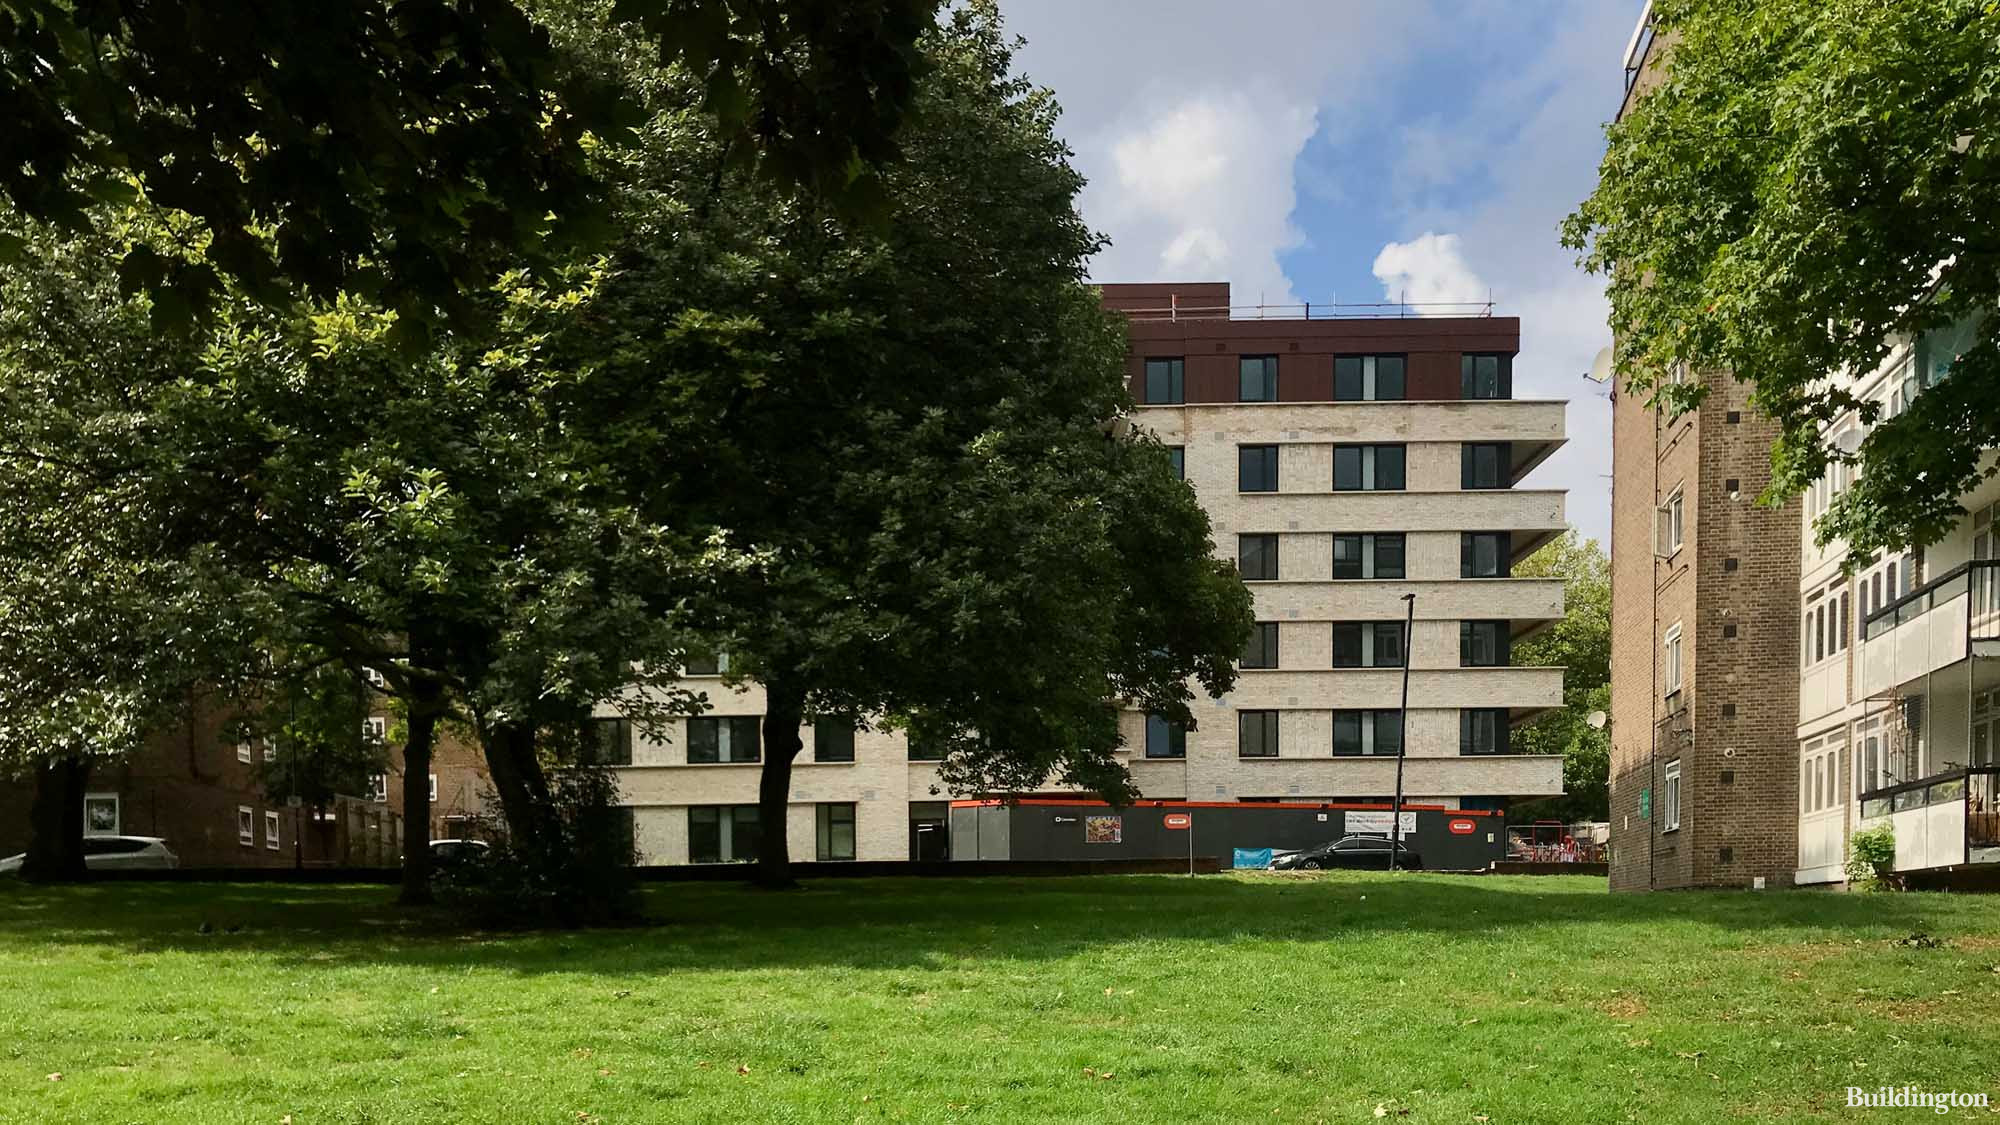 Noor Inayat Khan House at NEOS development on Maitland Park Villas in London NW3.